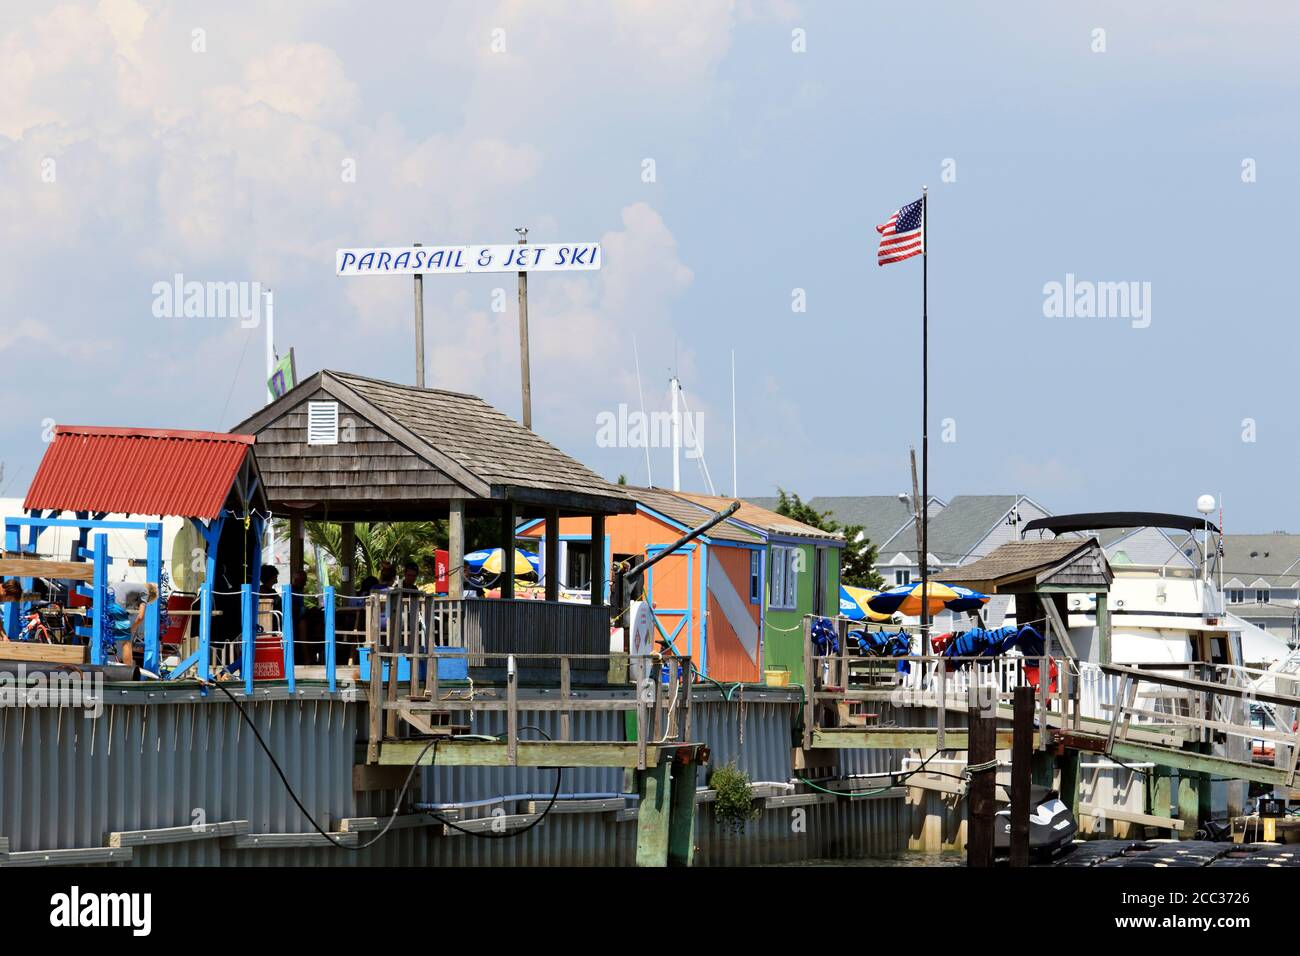 Ein Parasailing-Geschäft in Cape May, New Jersey, USA Stockfoto